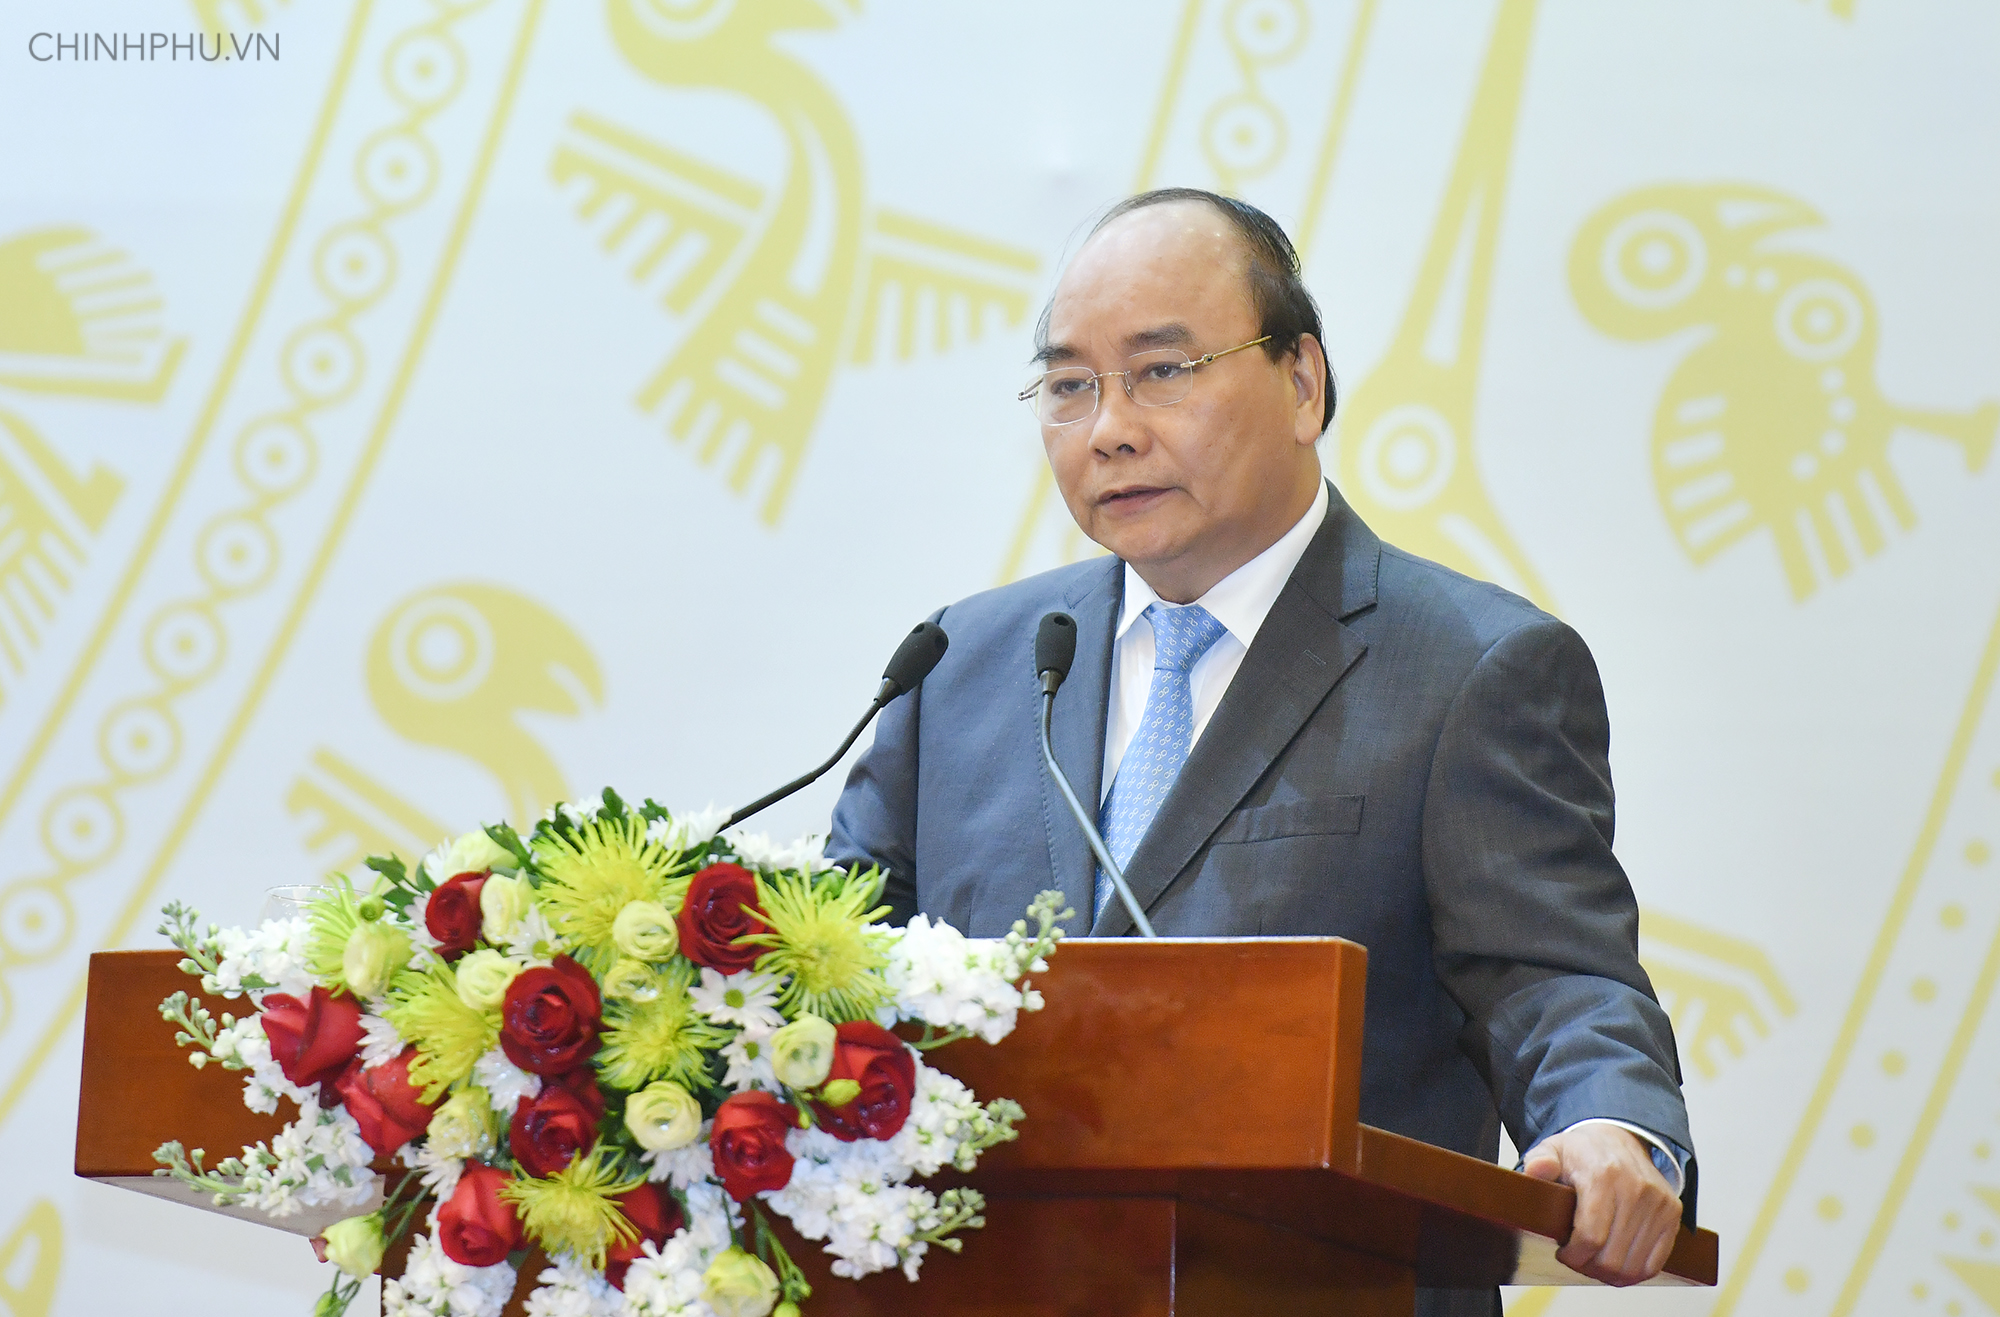 Prime Minister Nguyen Xuan Phuc at the conference (Photo: VGP / Quang Hieu)